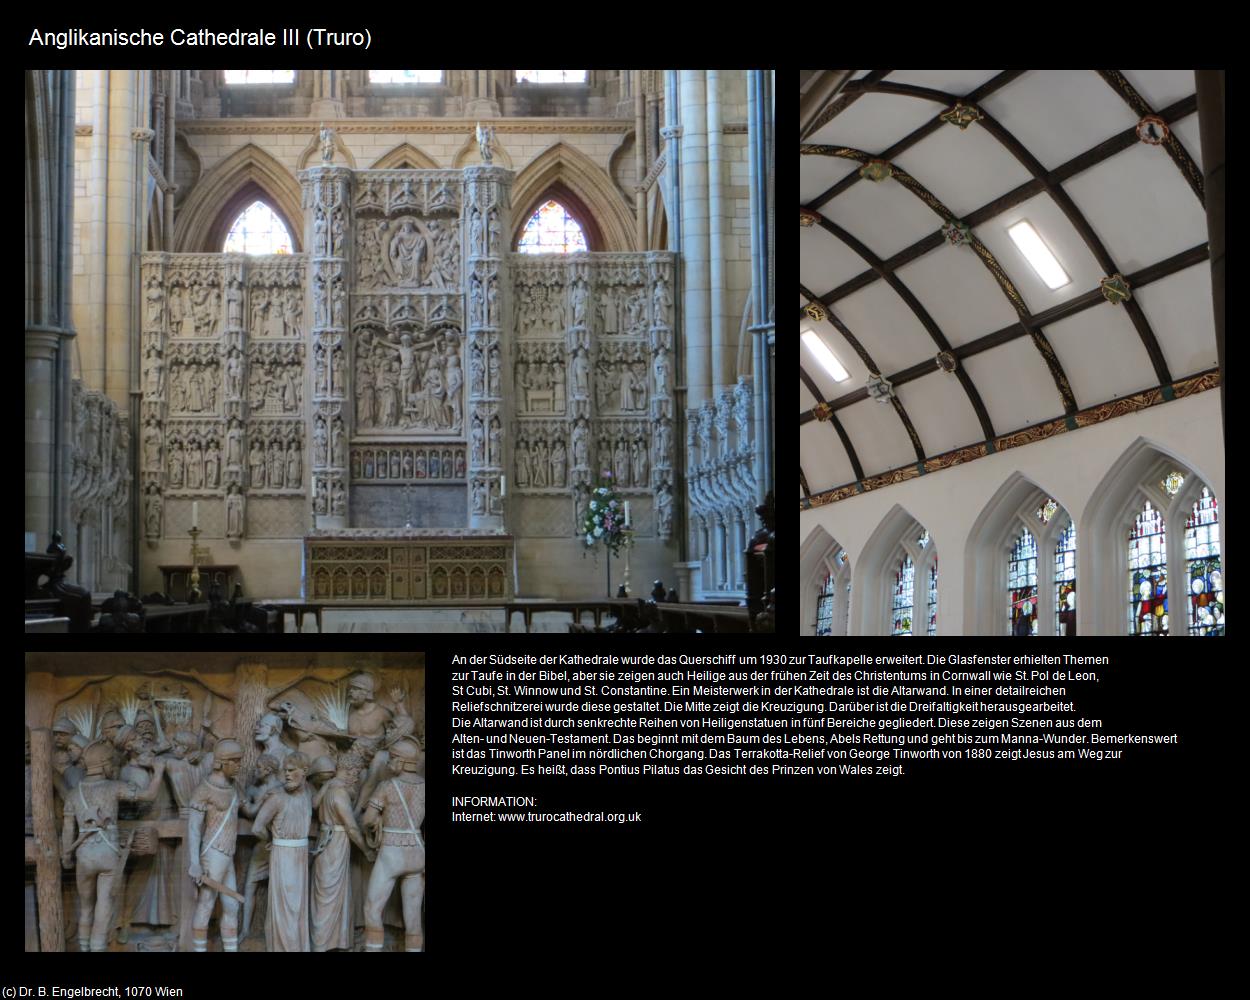 Anglikanische Cathedrale III  (Truro, England) in Kulturatlas-ENGLAND und WALES